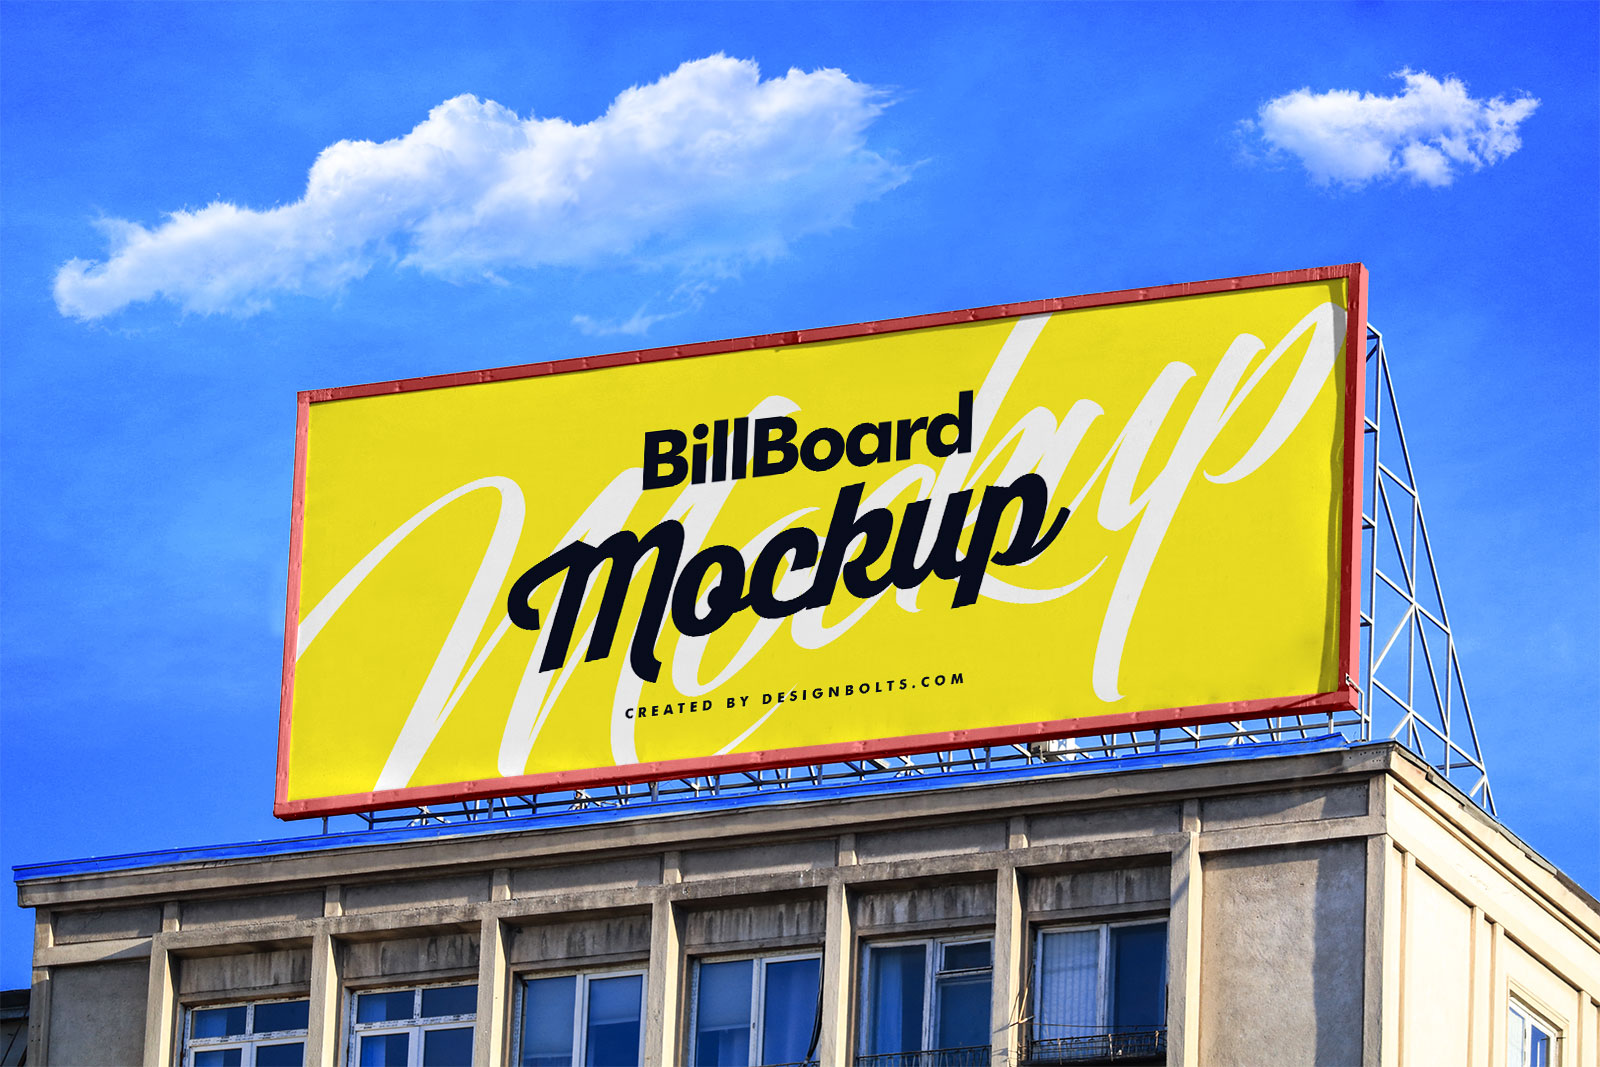 Outdoor Advertising Billboard on Building Mockup